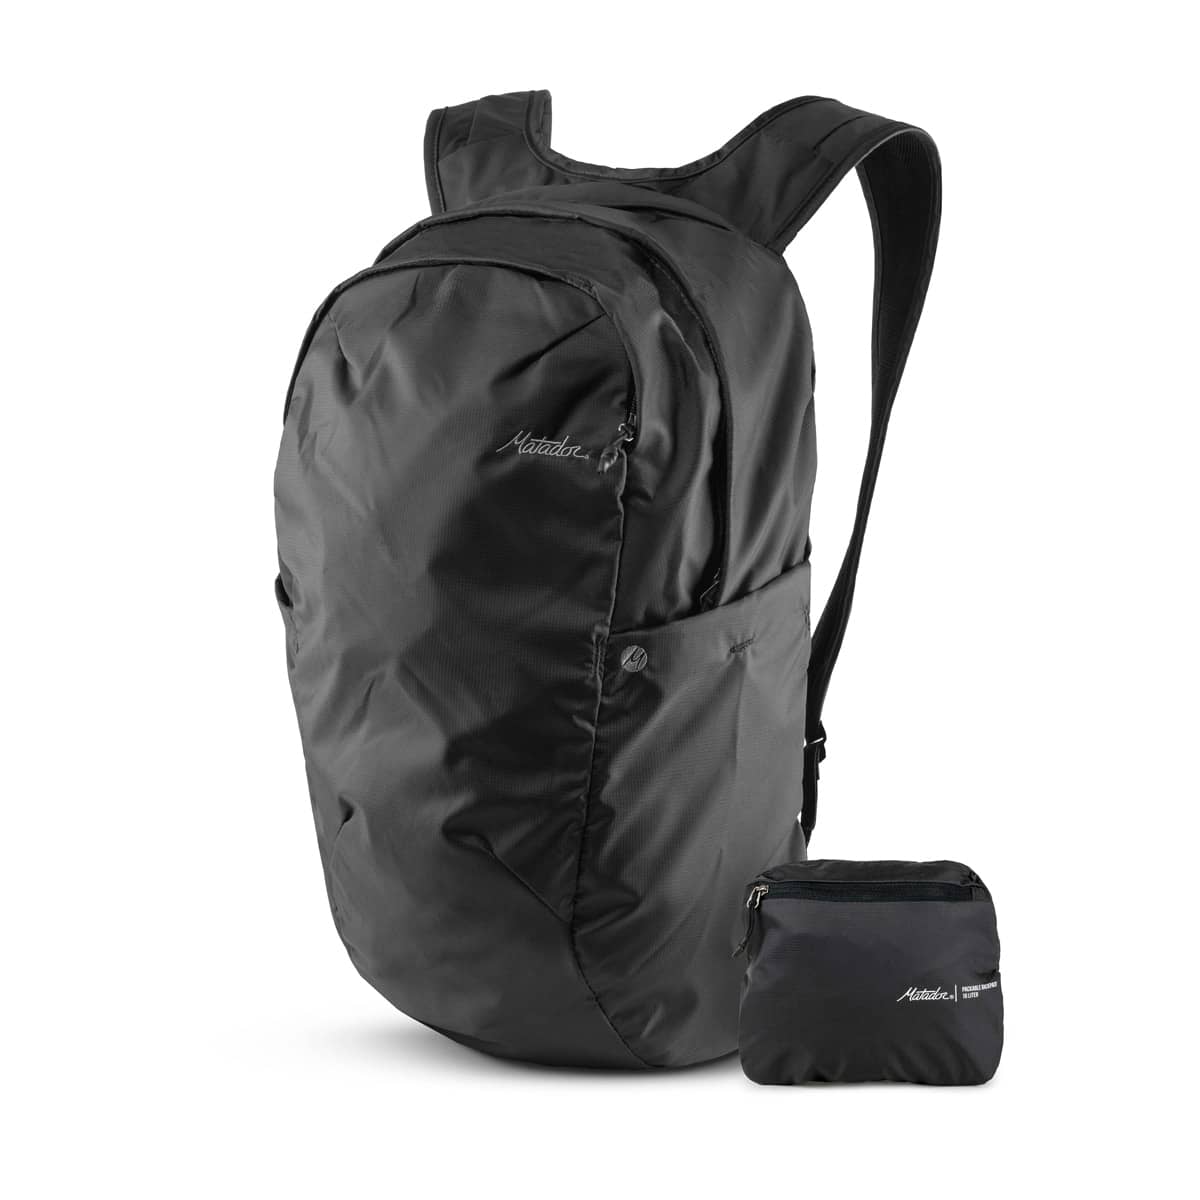 On-Grid Packable Backpack